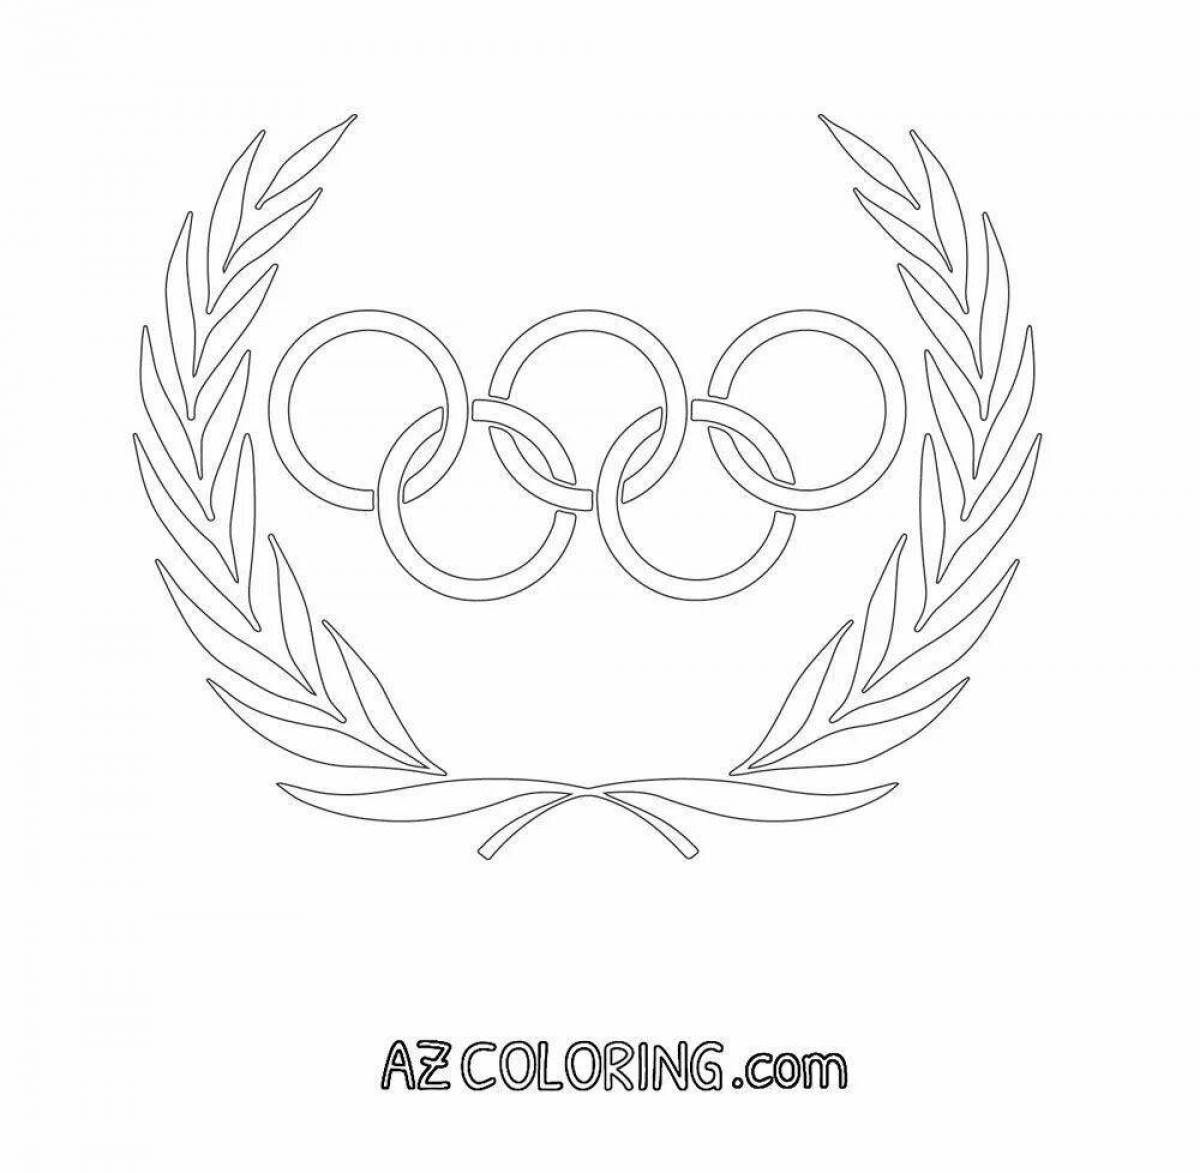 Захватывающая раскраска олимпийского флага